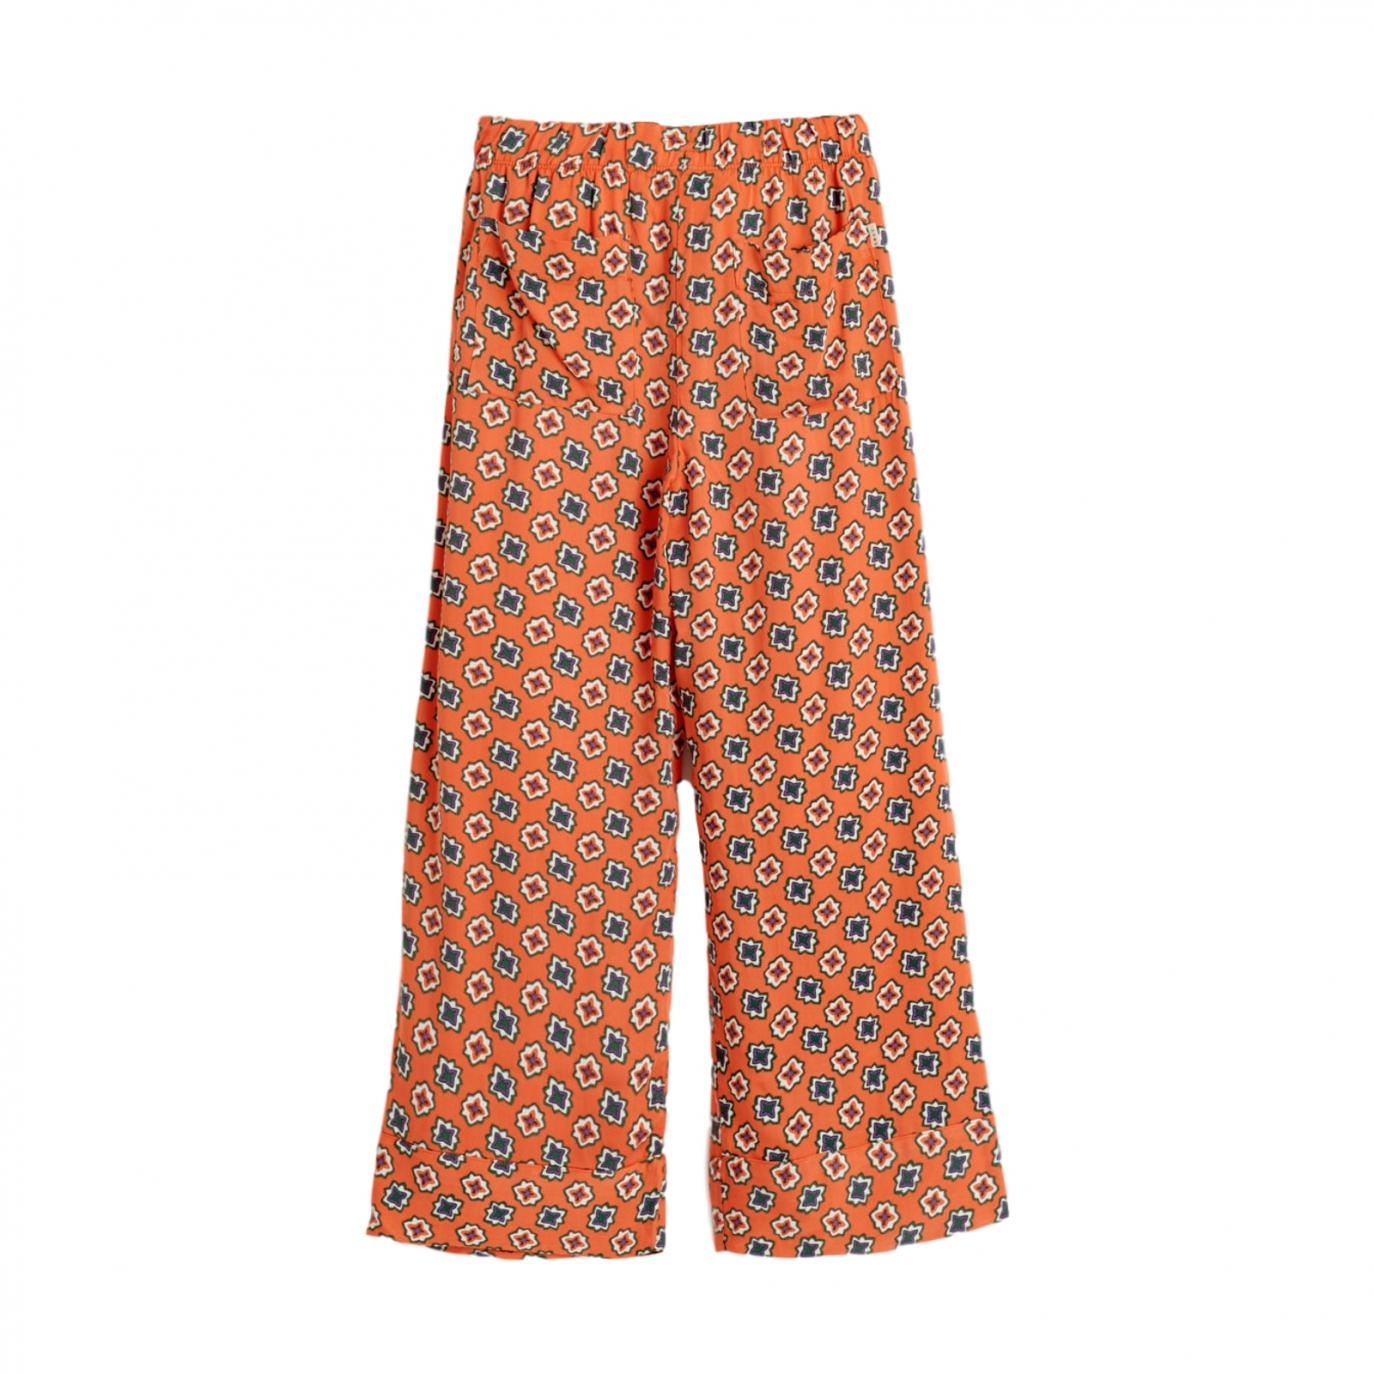 Bellerose - Peanut Pants Orange - Pants & leggings - BK201104 F1825 